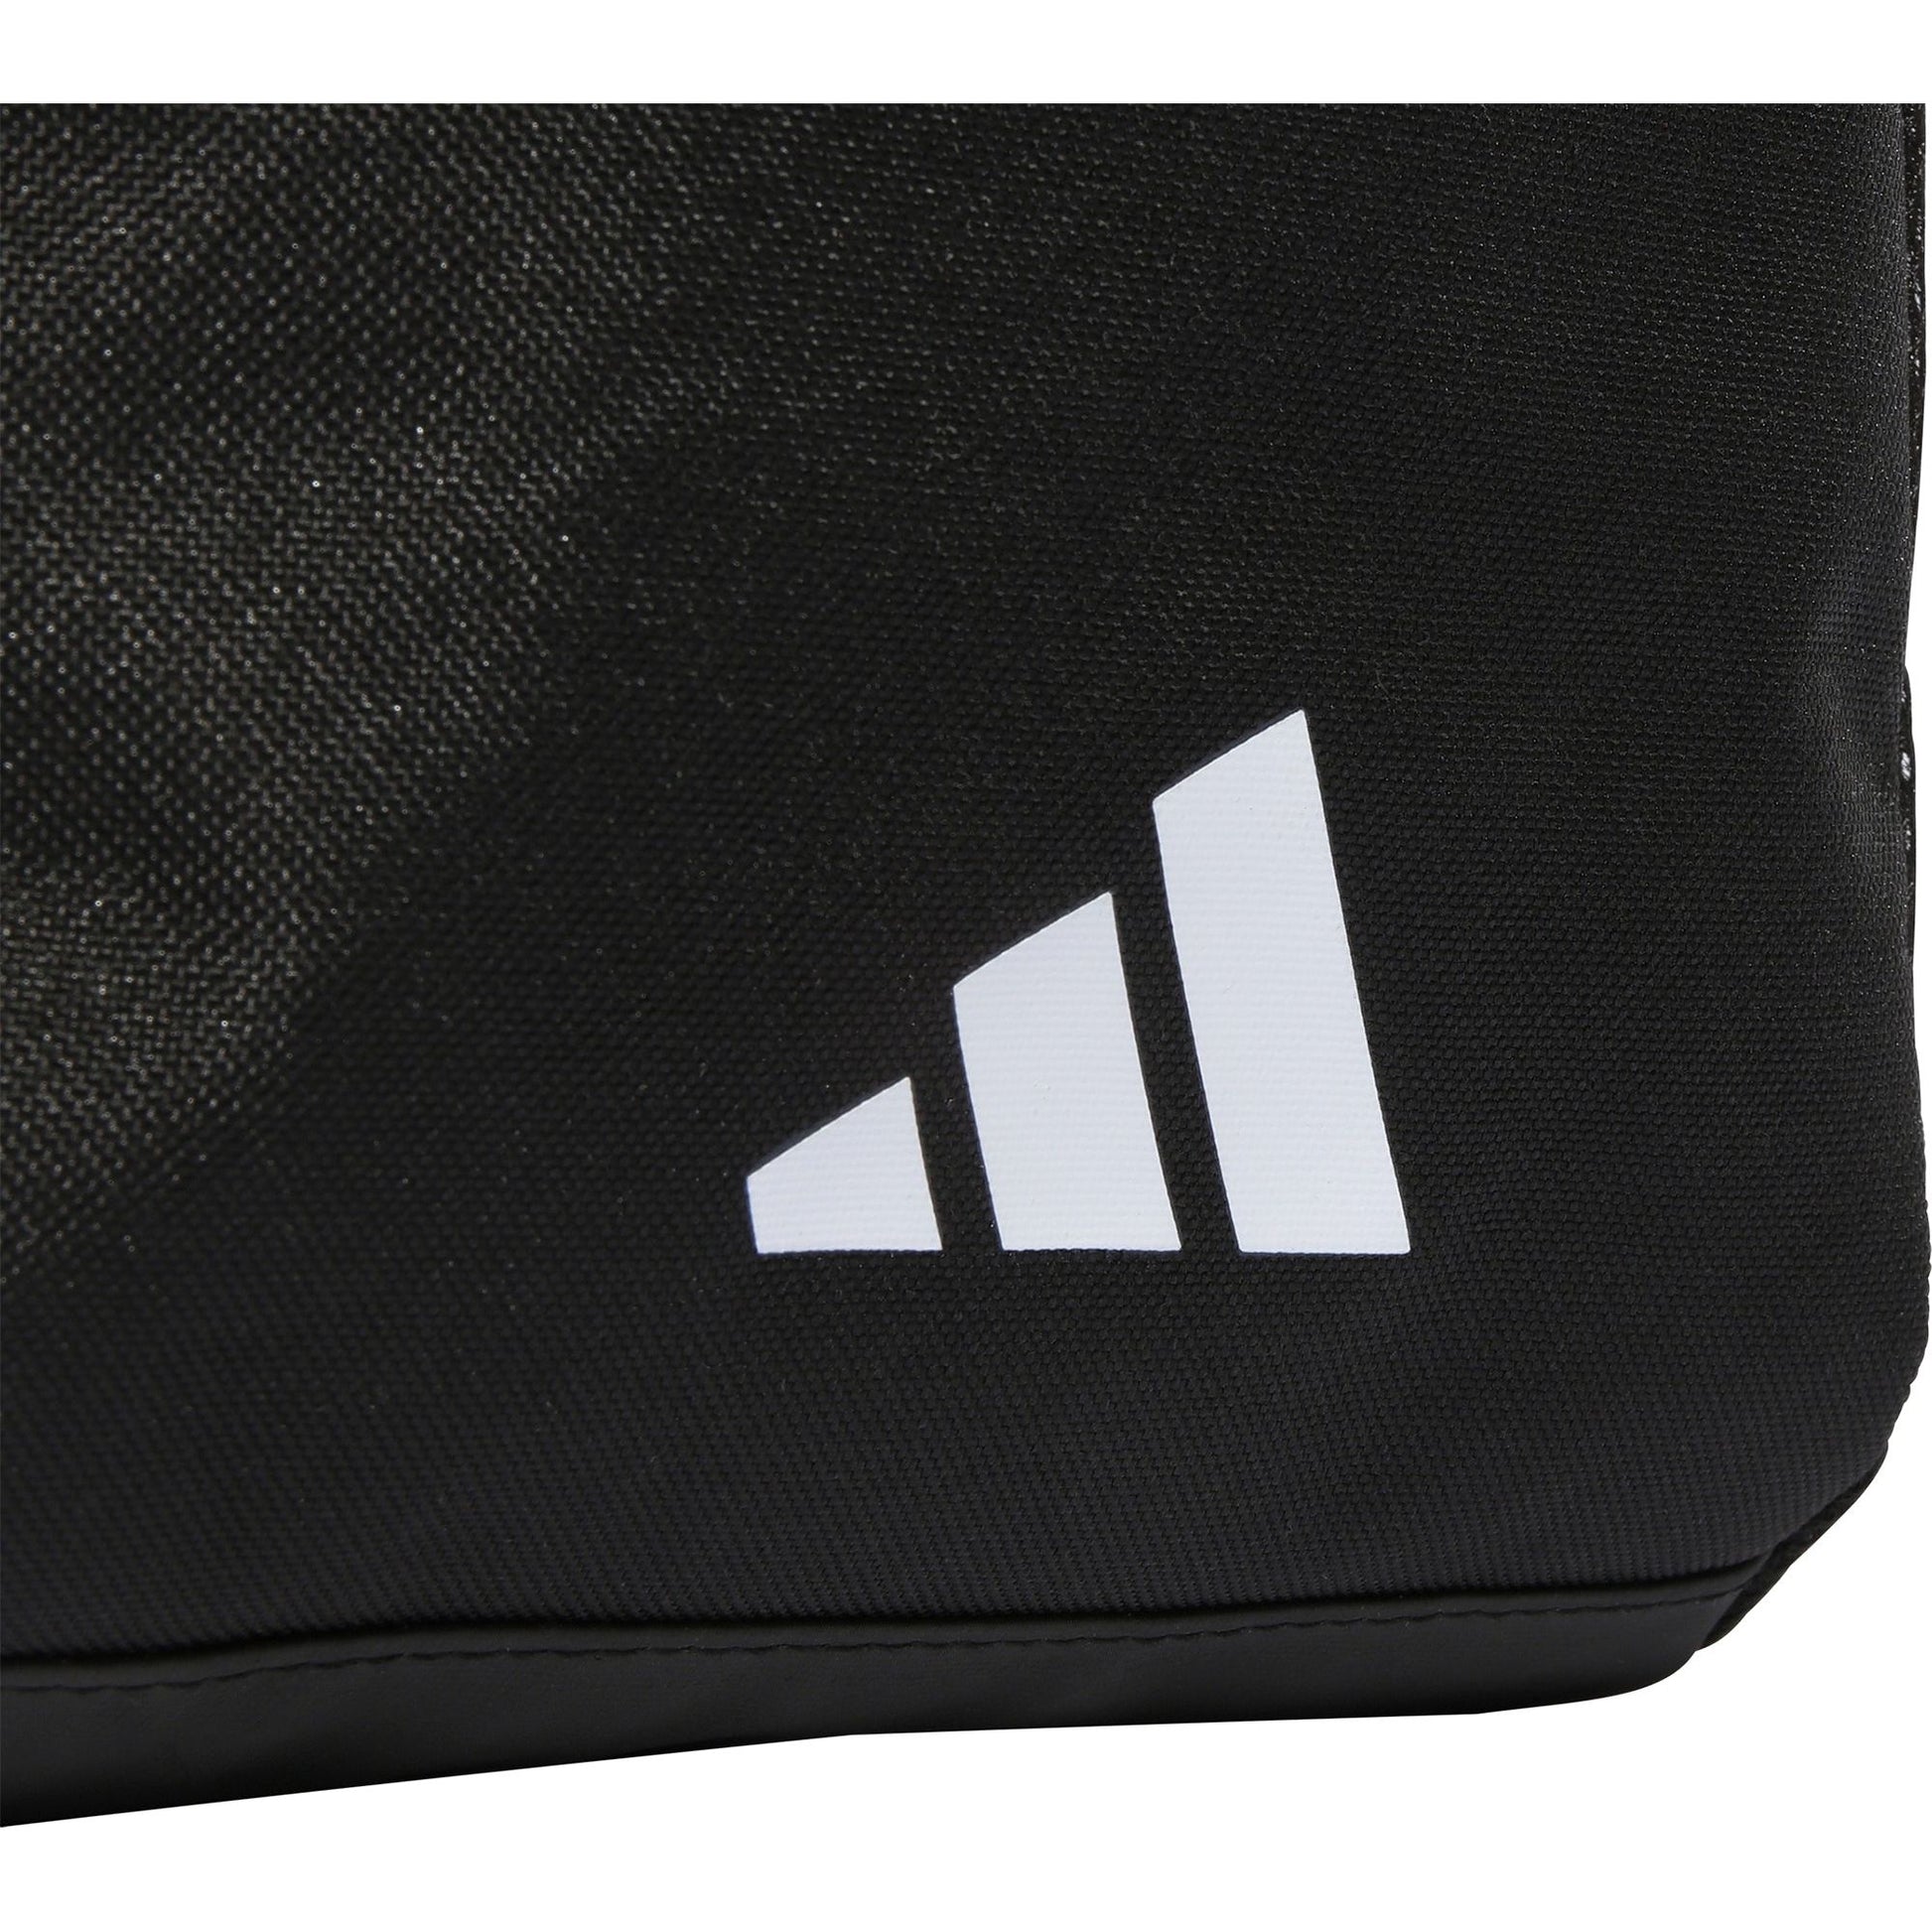 Adidas Tiro Oleague Boot Bag Hs9767 Details